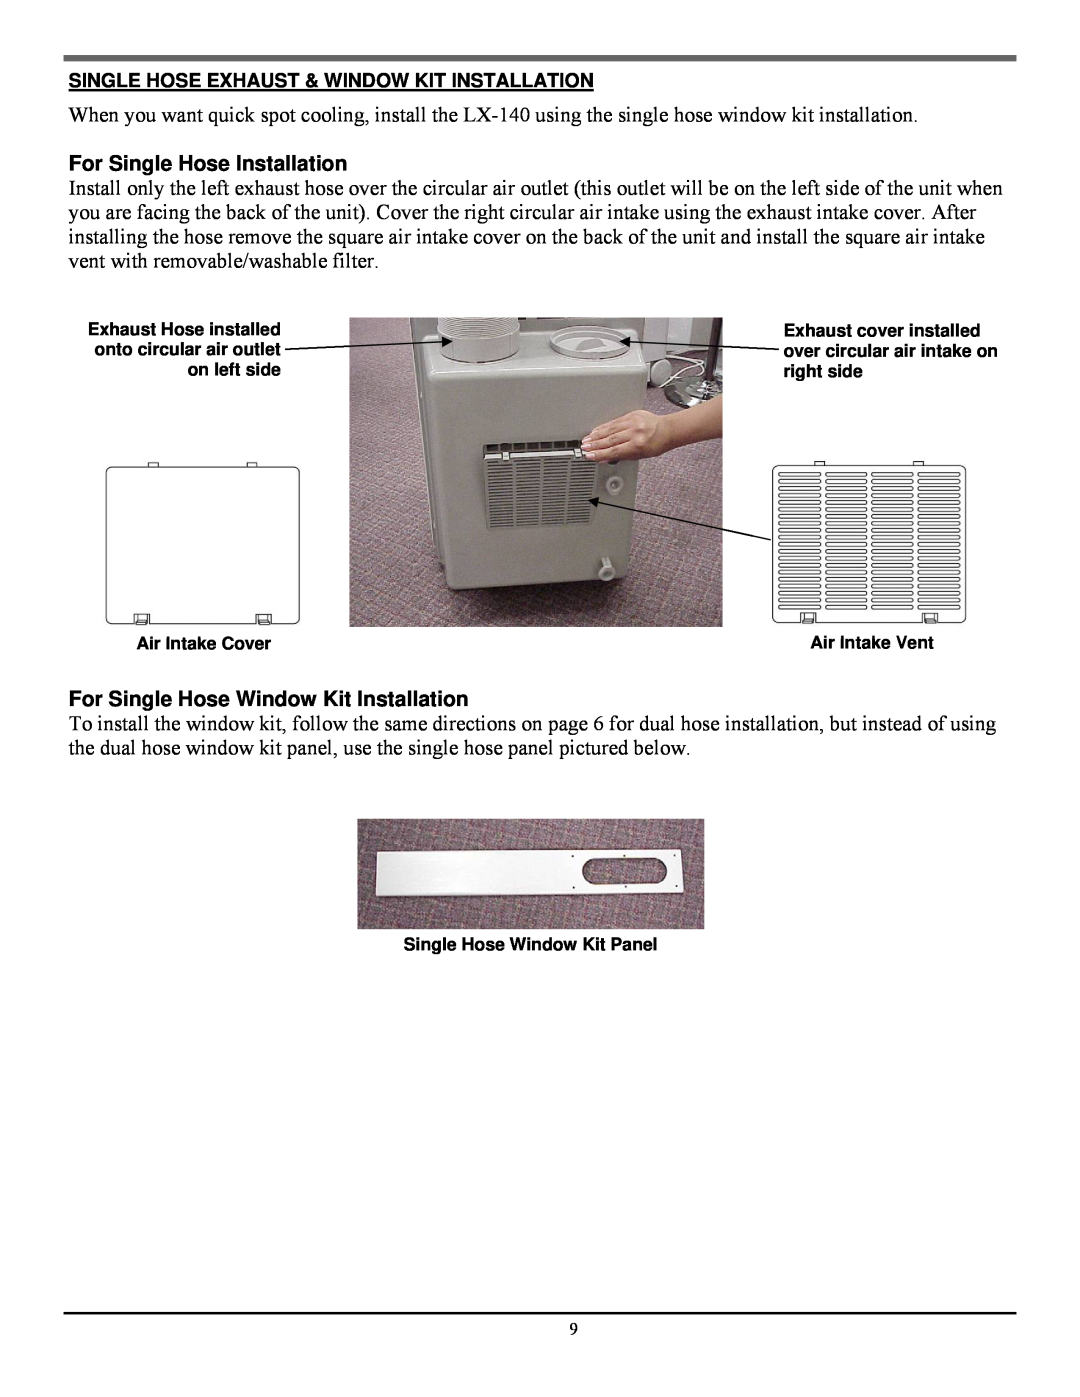 Soleus Air LX-140 manual For Single Hose Installation, For Single Hose Window Kit Installation 